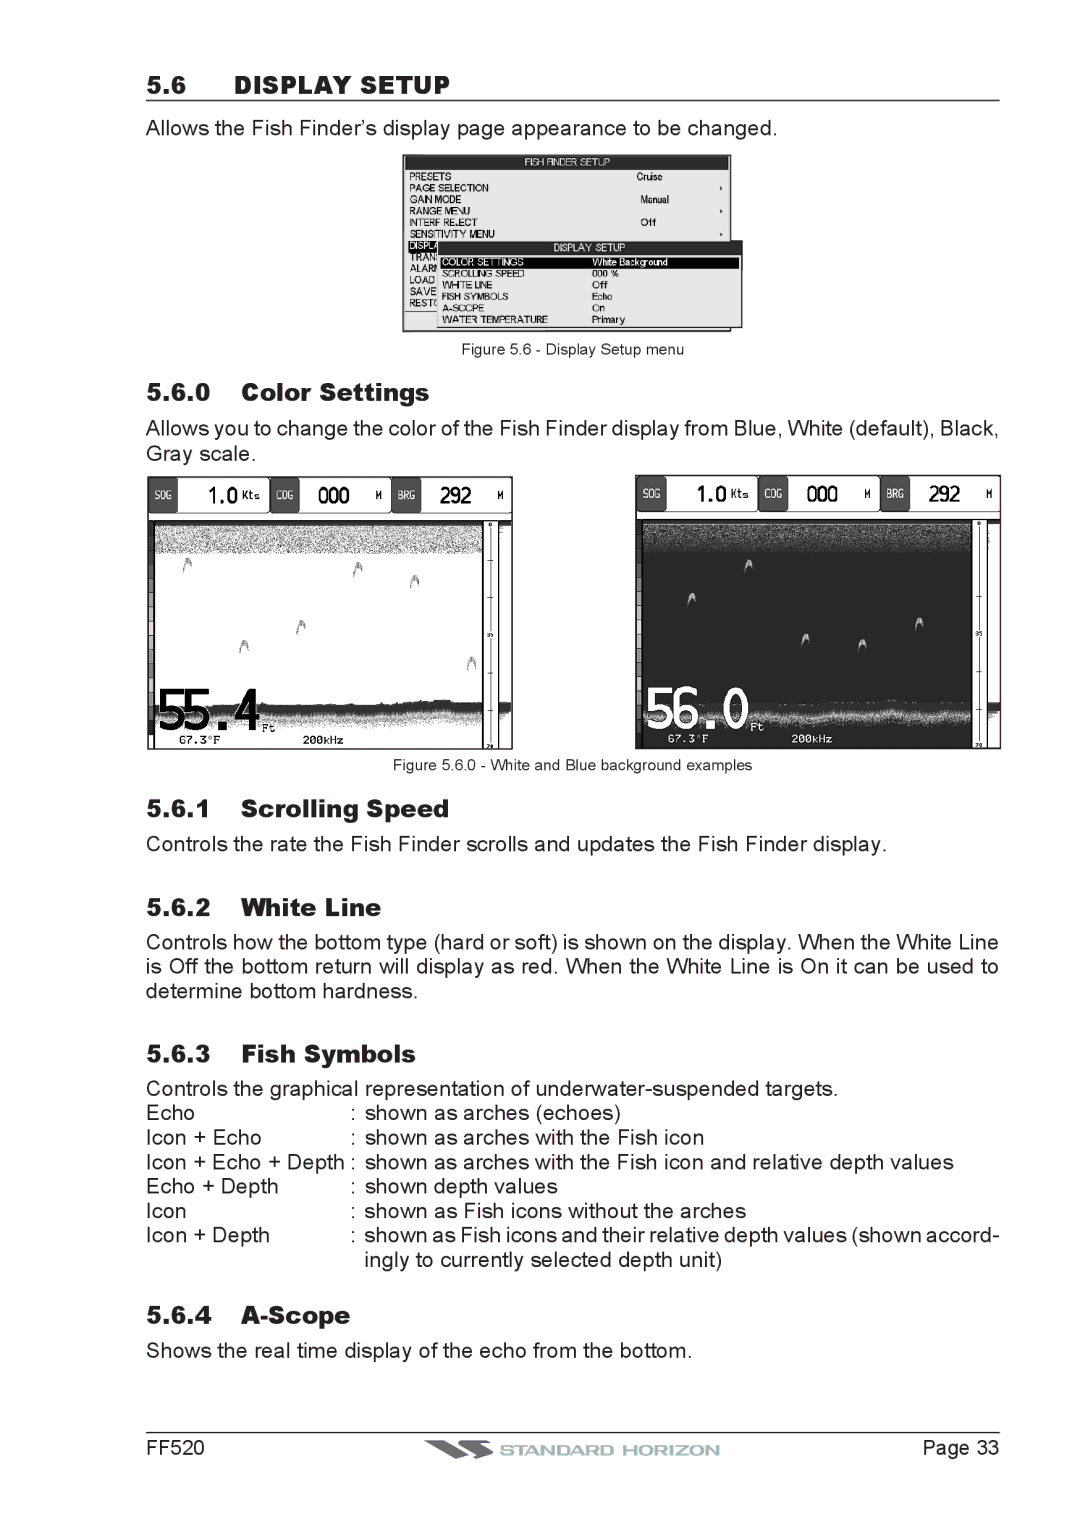 Standard Horizon Ff520 installation and operation guide Display Setup 